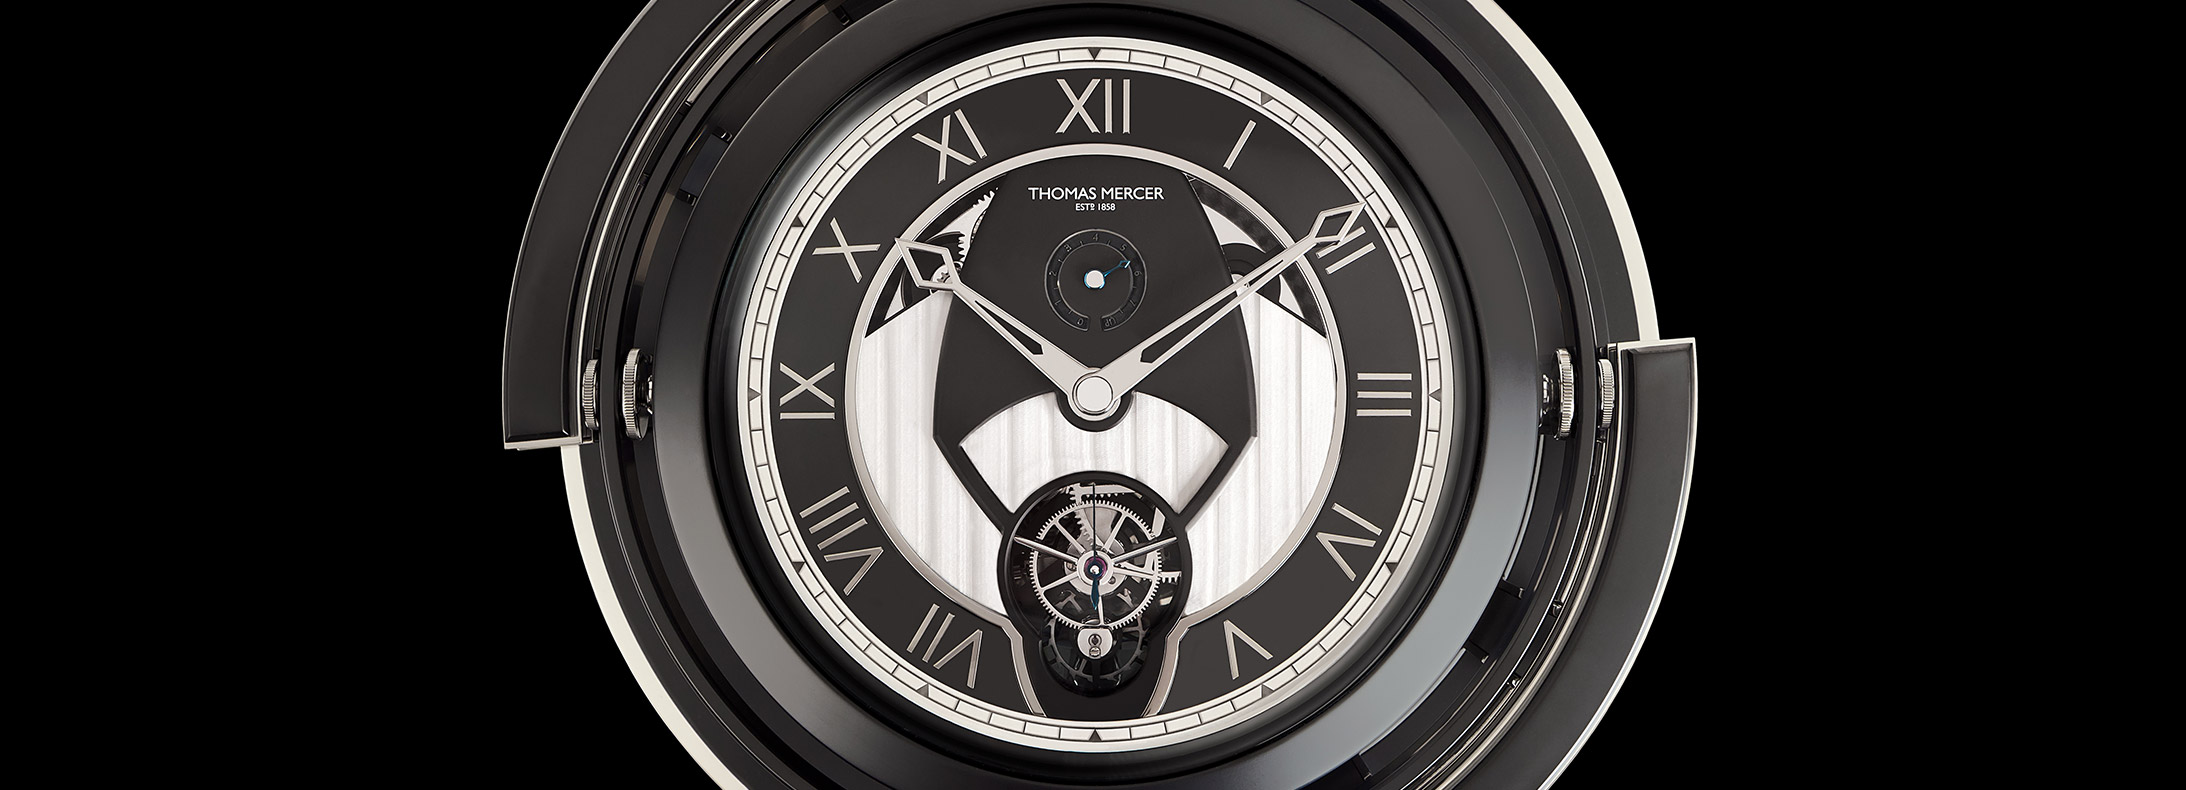 Legacy Marine chronometer boasting a superior architecture cabinet